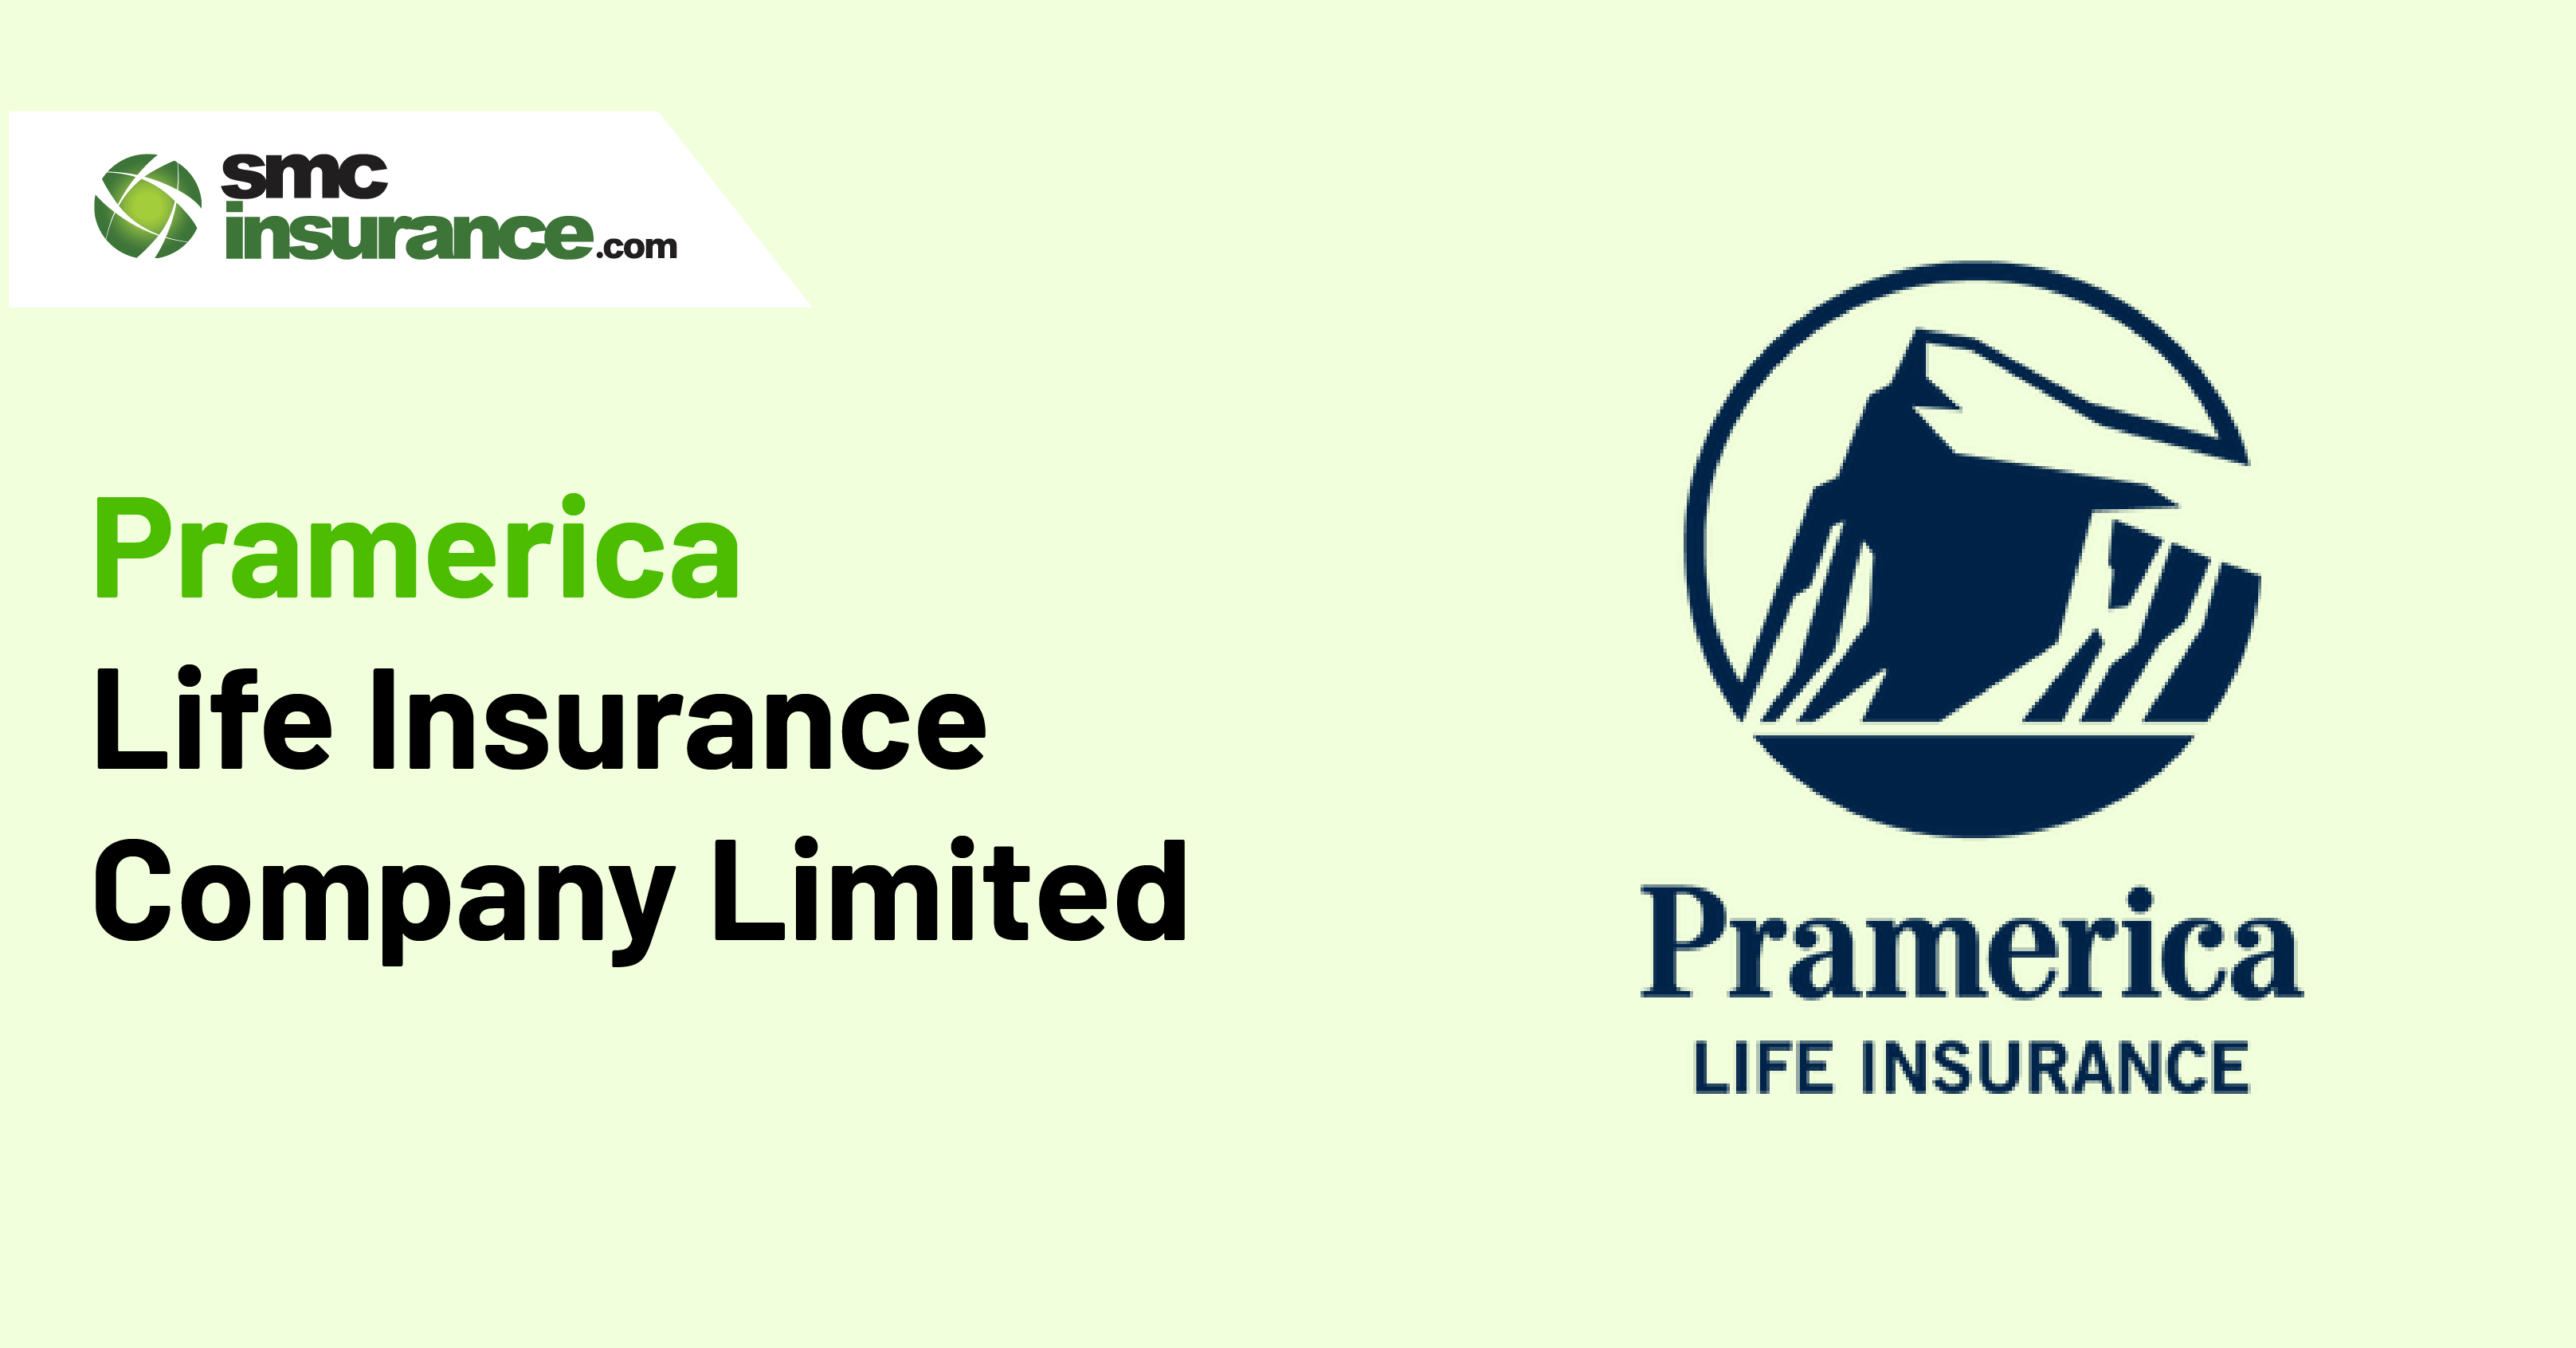 Pramerica Life Insurance Company Limited